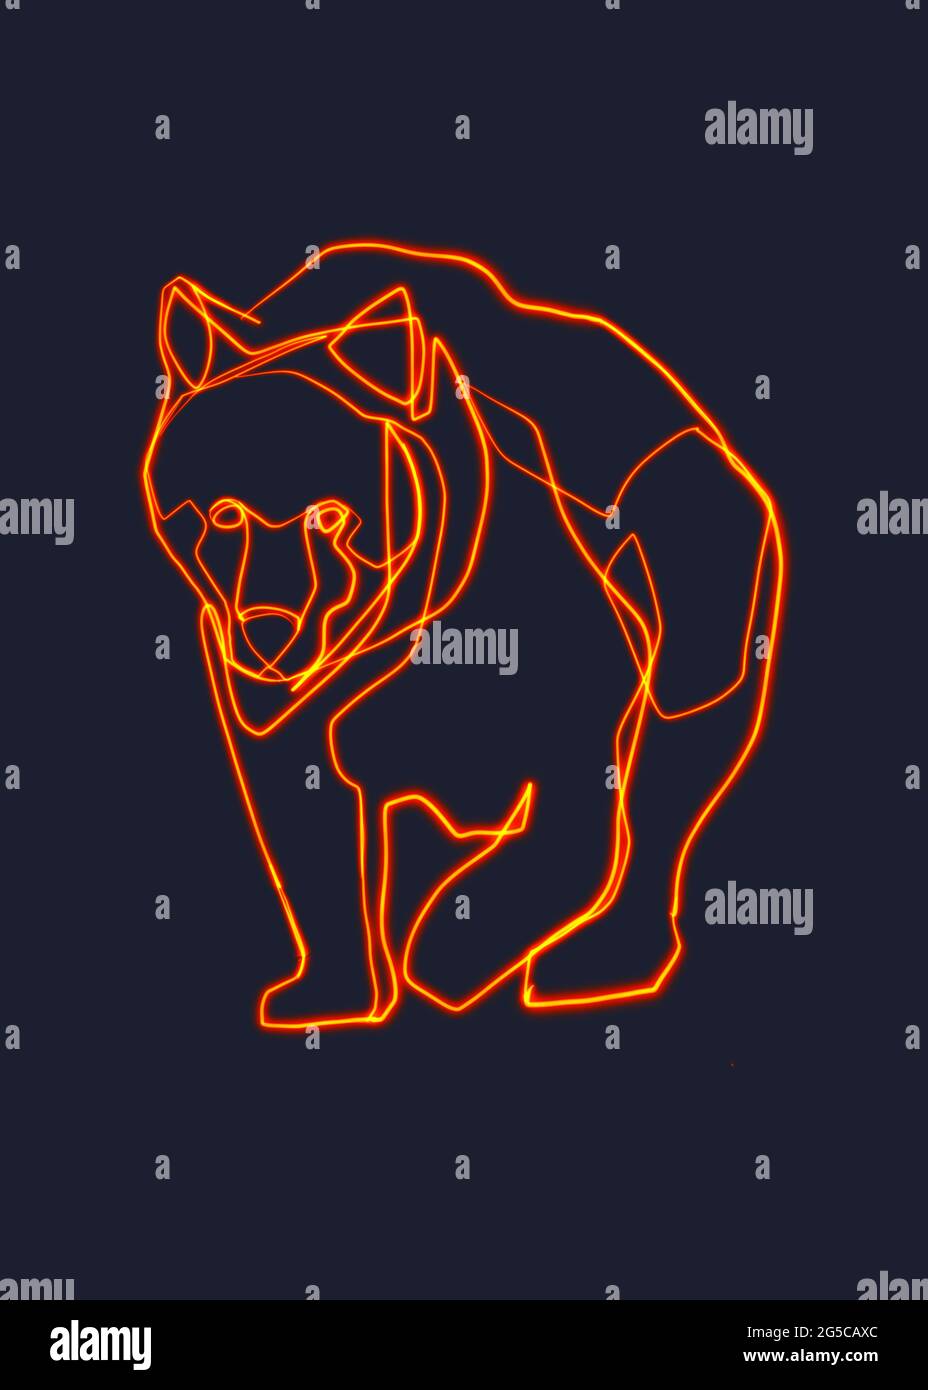 Hand drawn minimal illustration or drawing of a bear Stock Photo